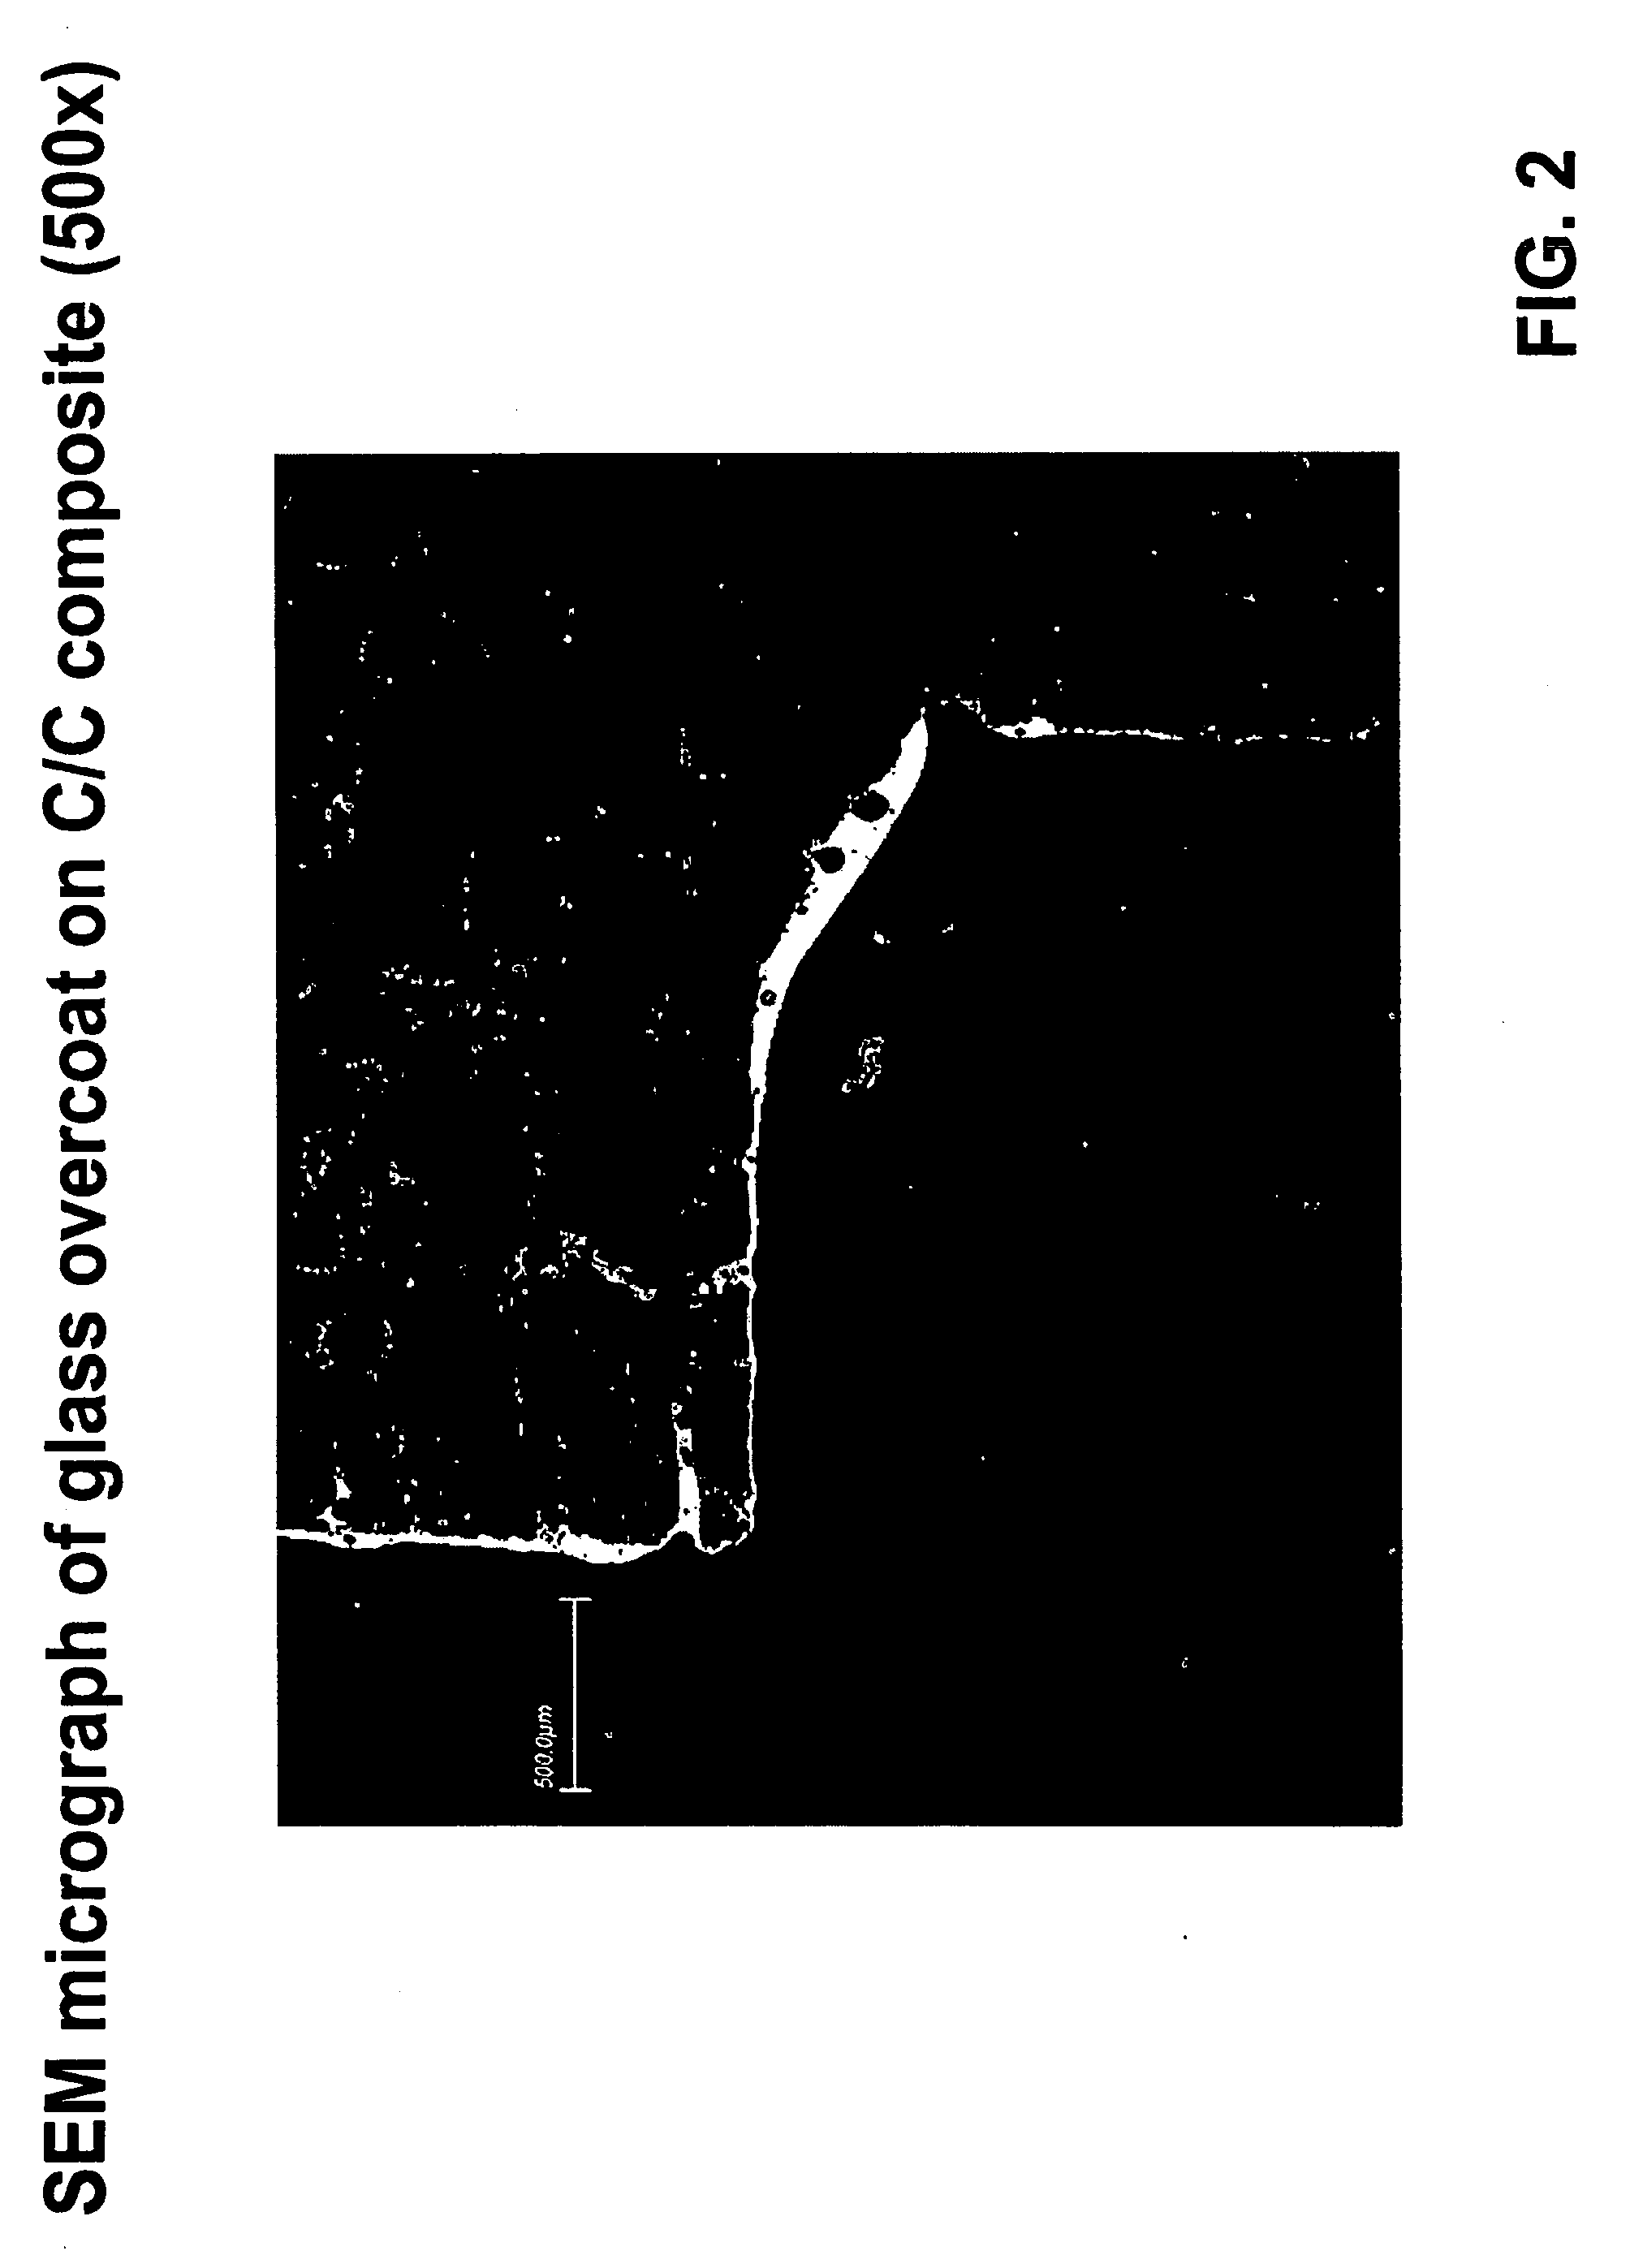 Oxidation inhibition of carbon-carbon composites